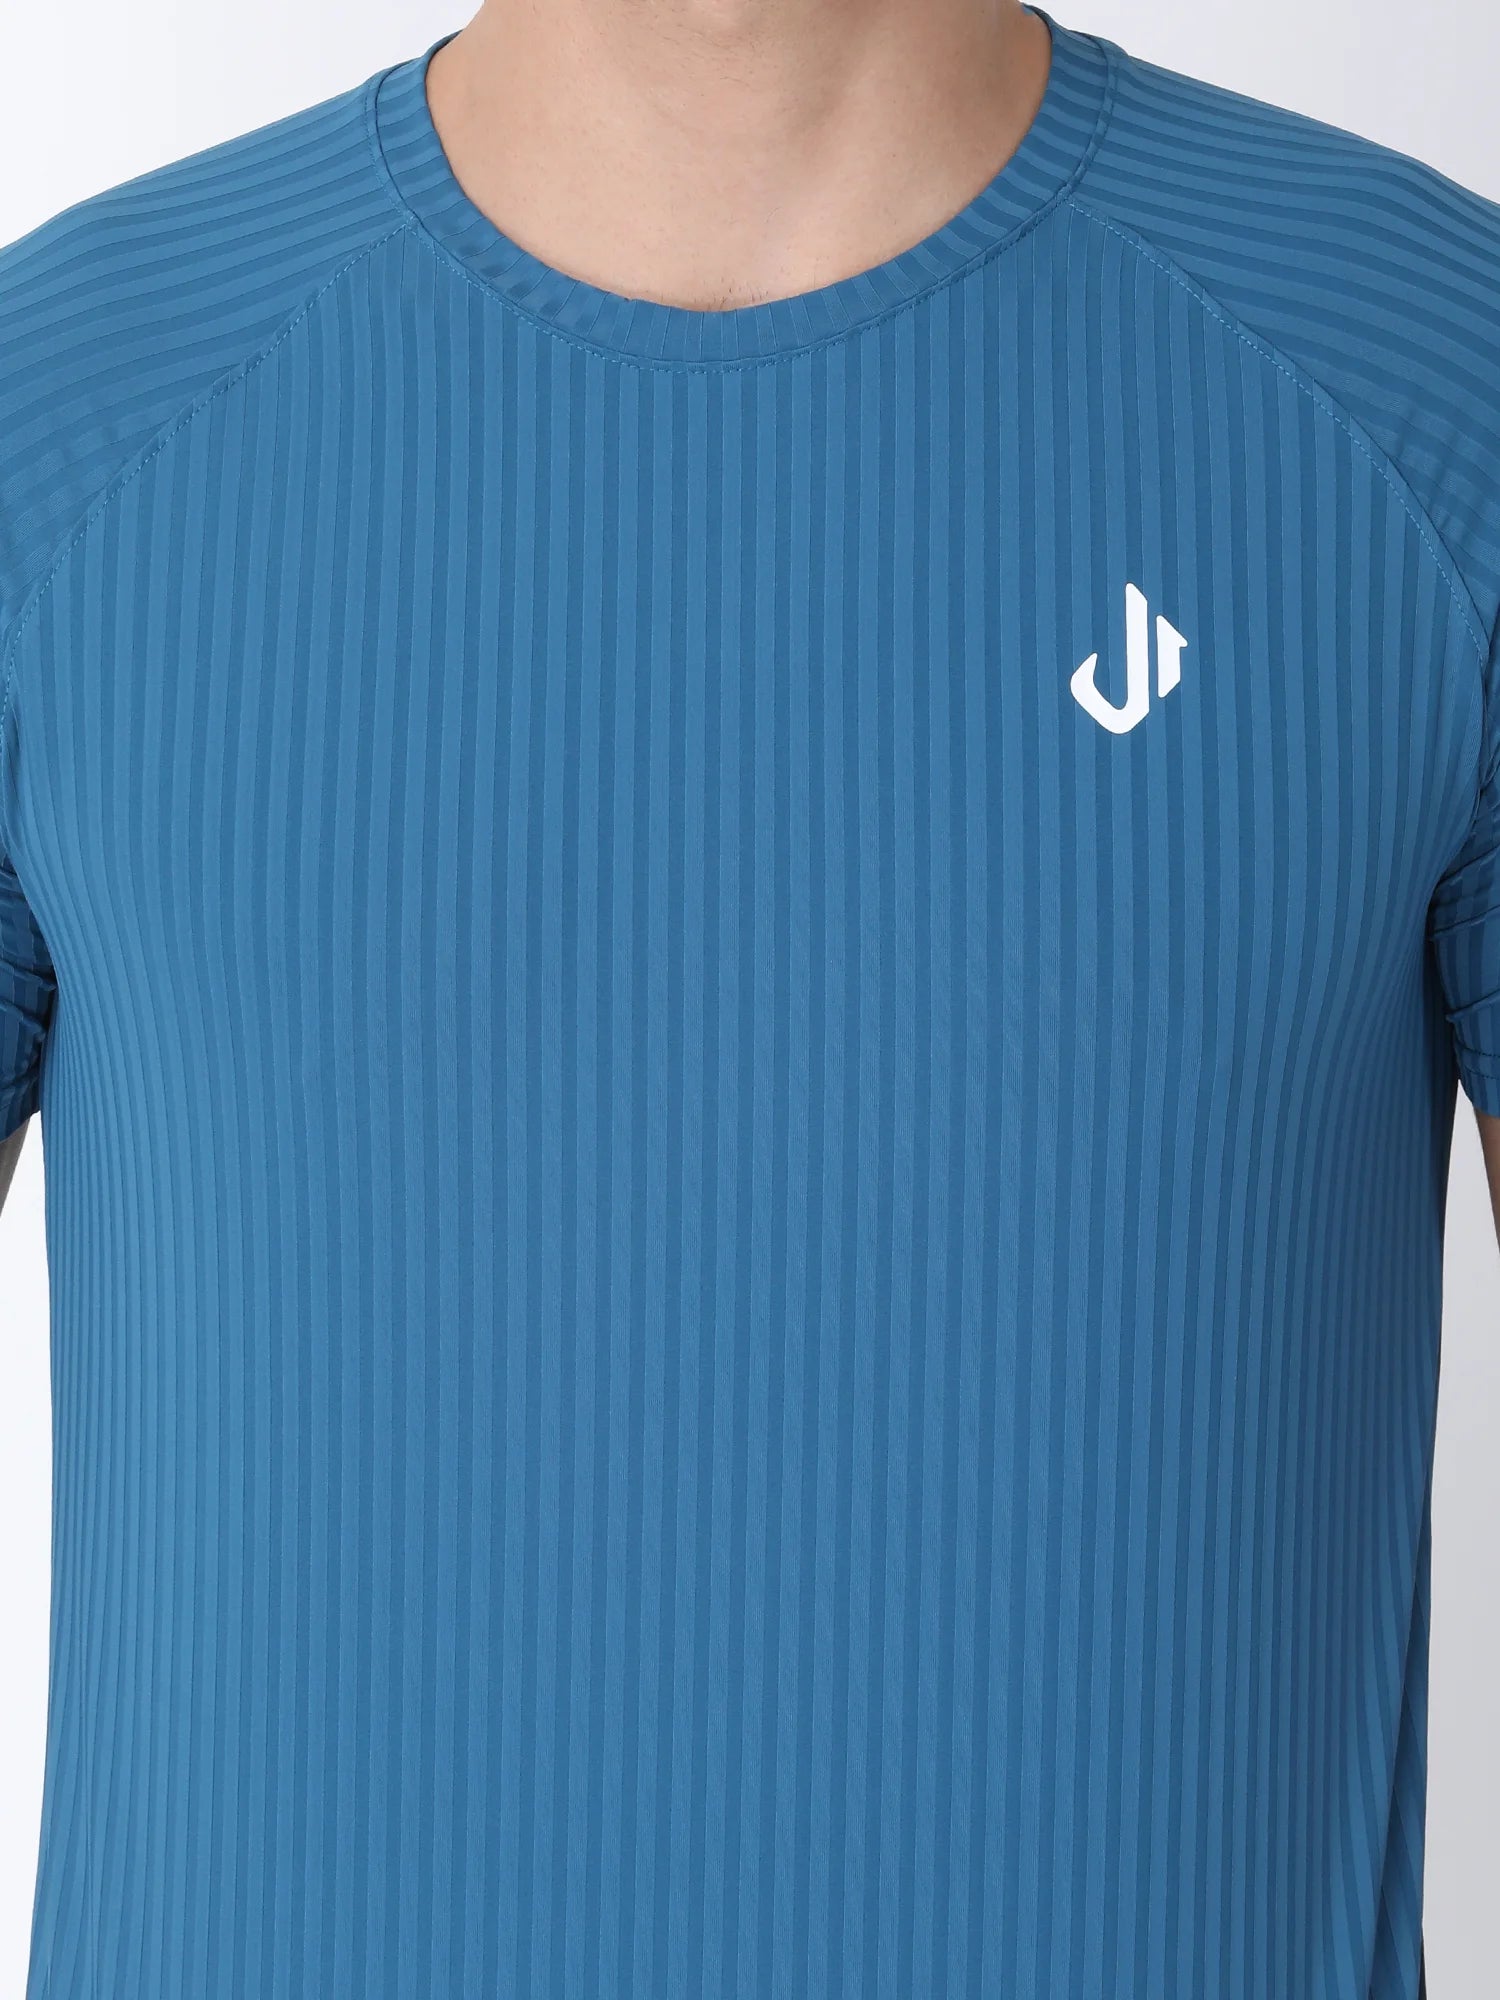 Jeffa Fit Fusion Nylon T-shirt in Blue